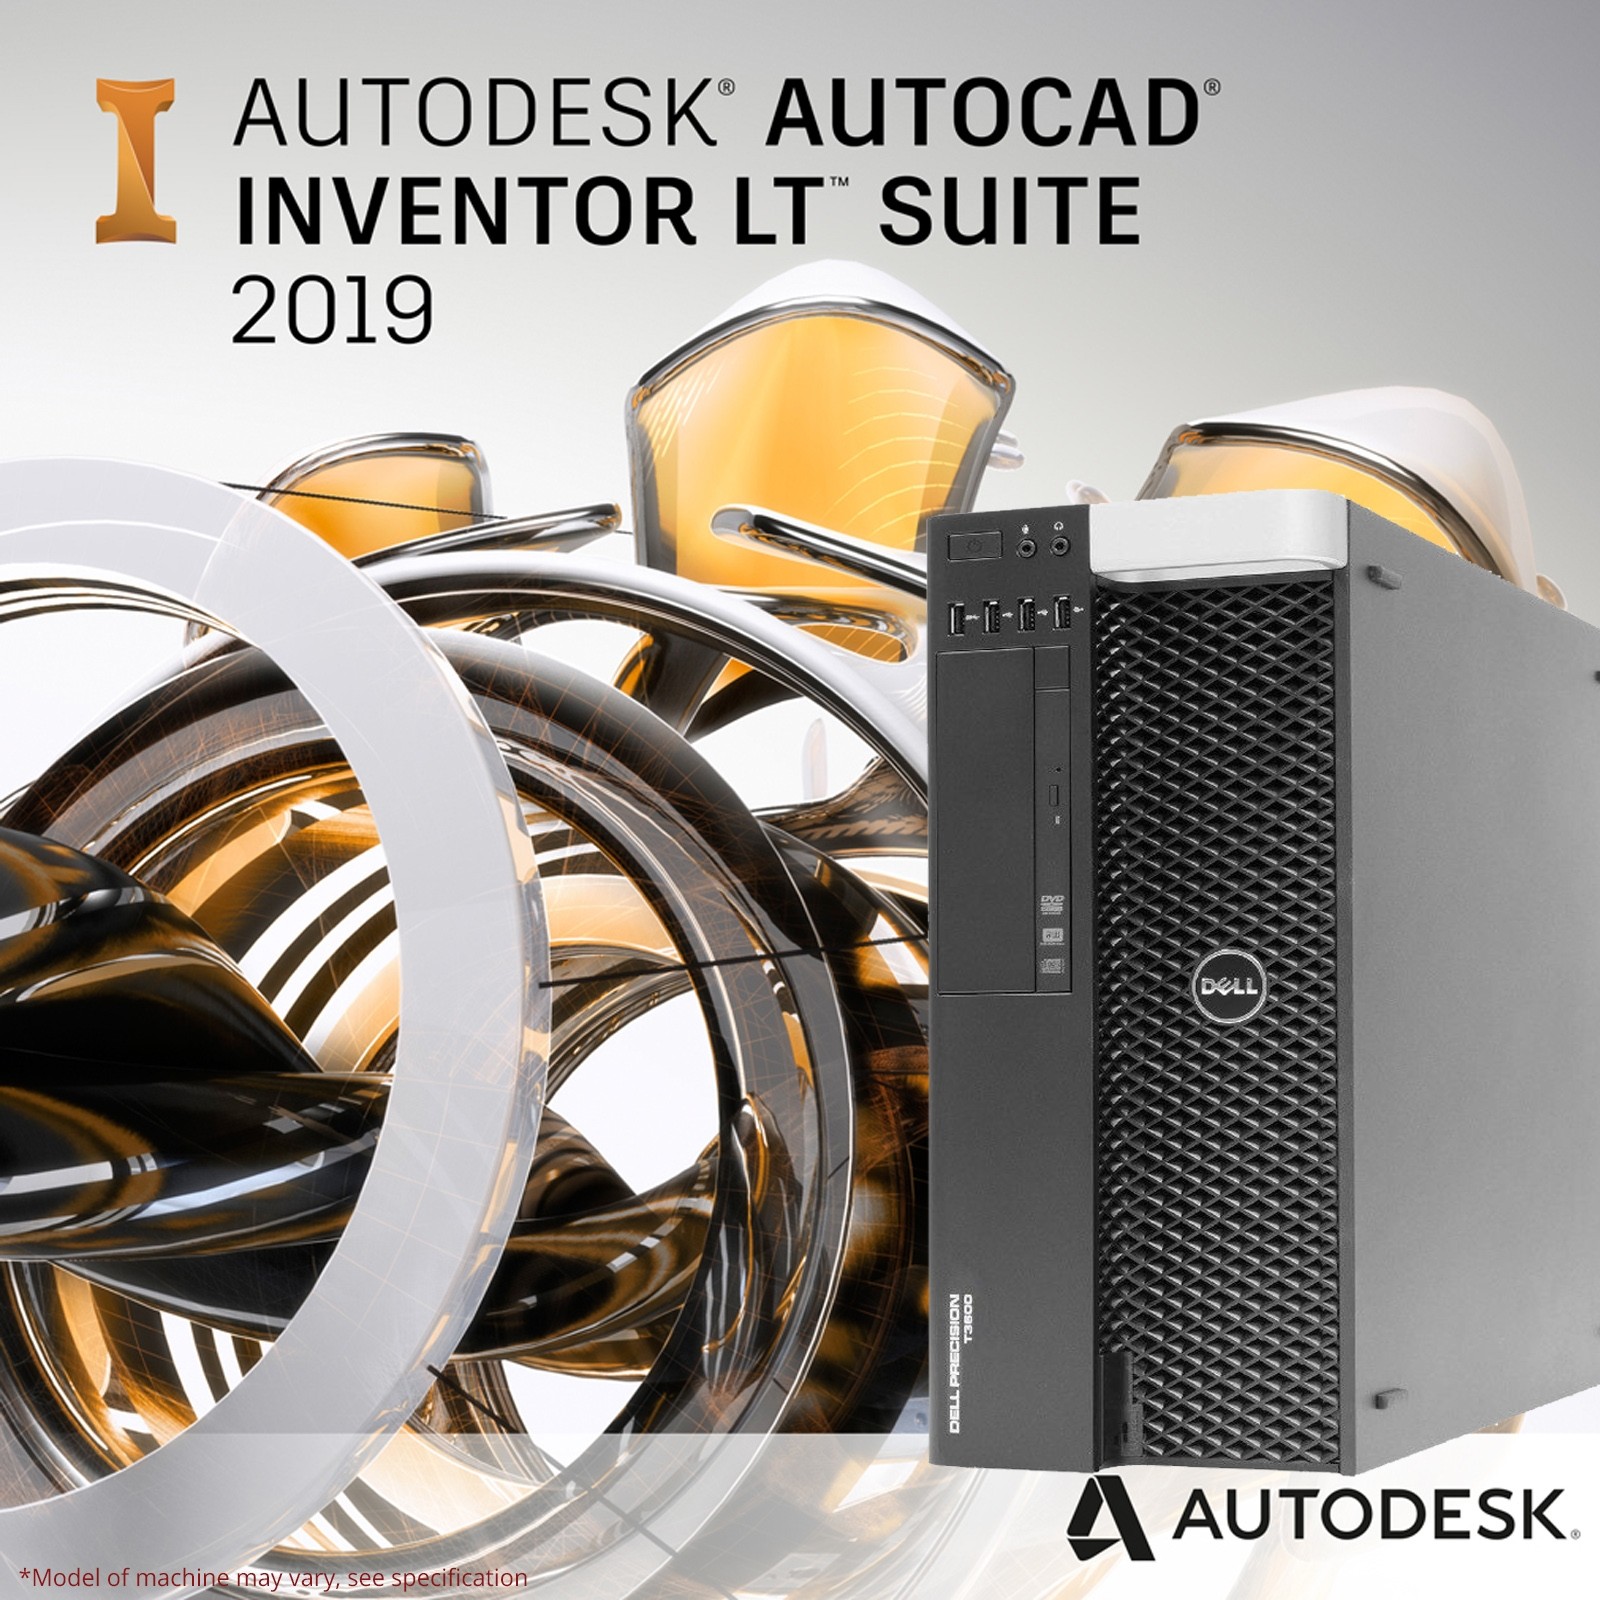 AutoDesk Inventor LT Pre-Configured Workstation